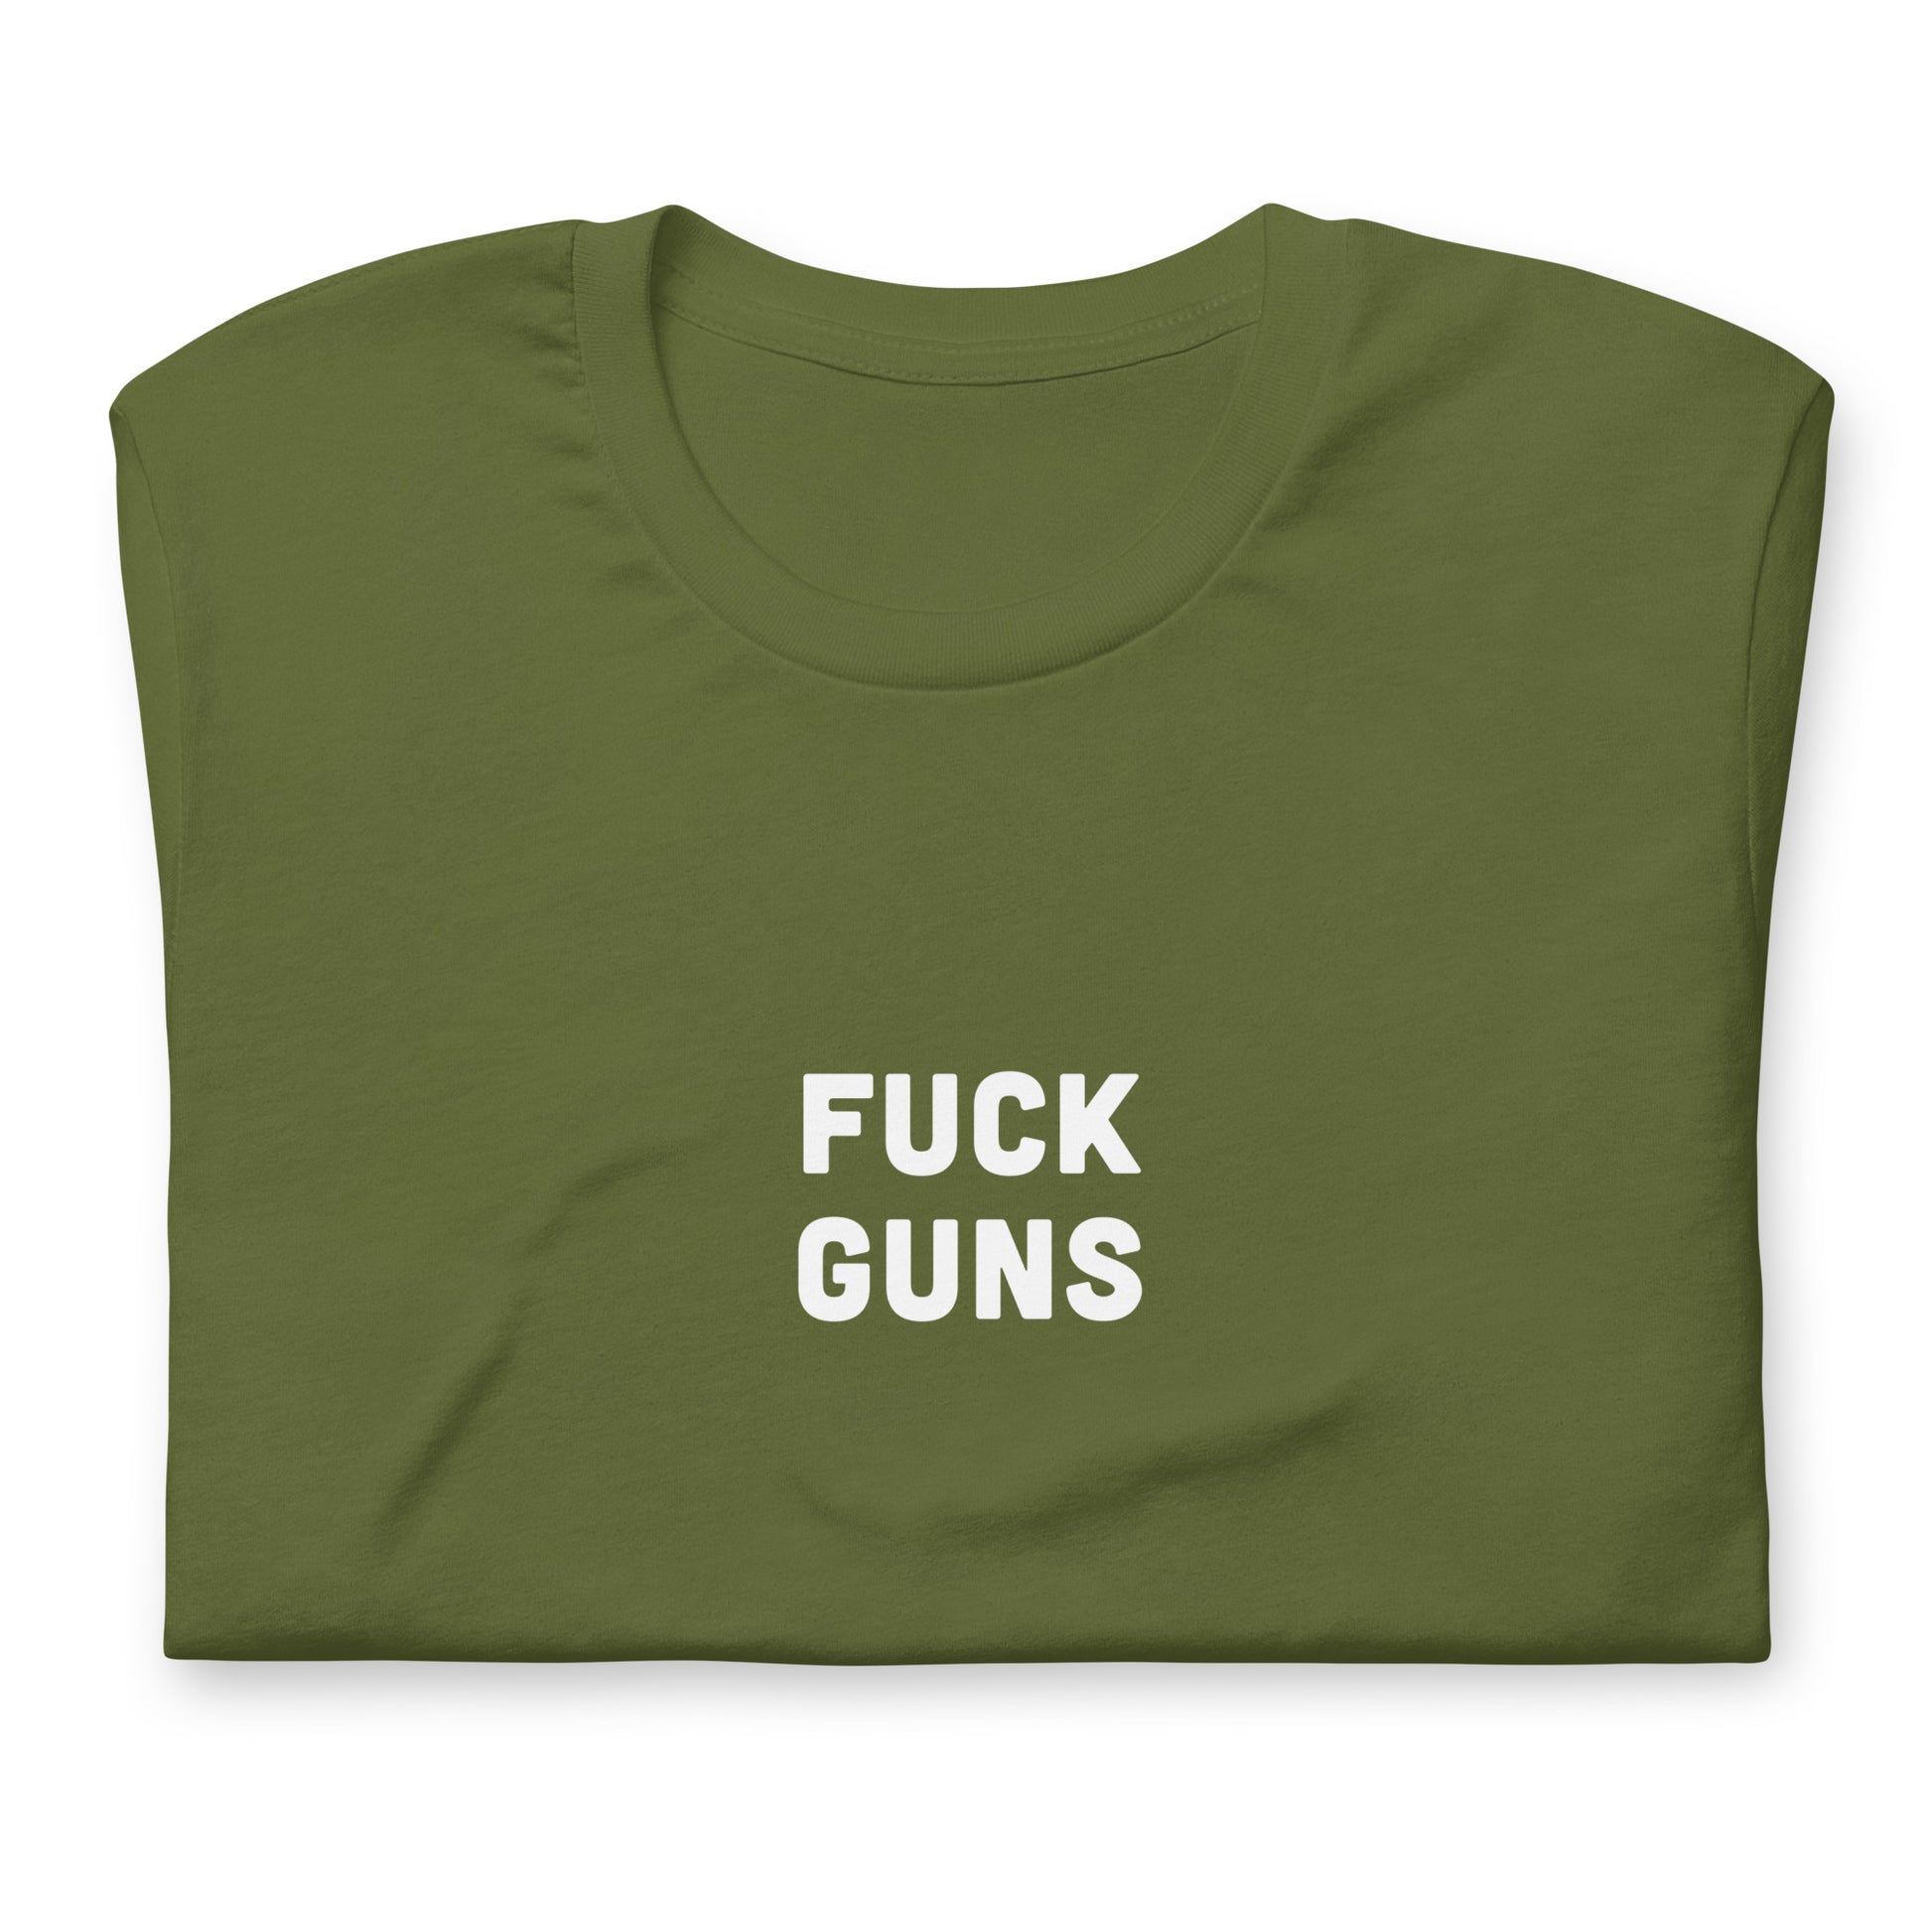 Fuck Guns T-Shirt Size 2XL Color Black